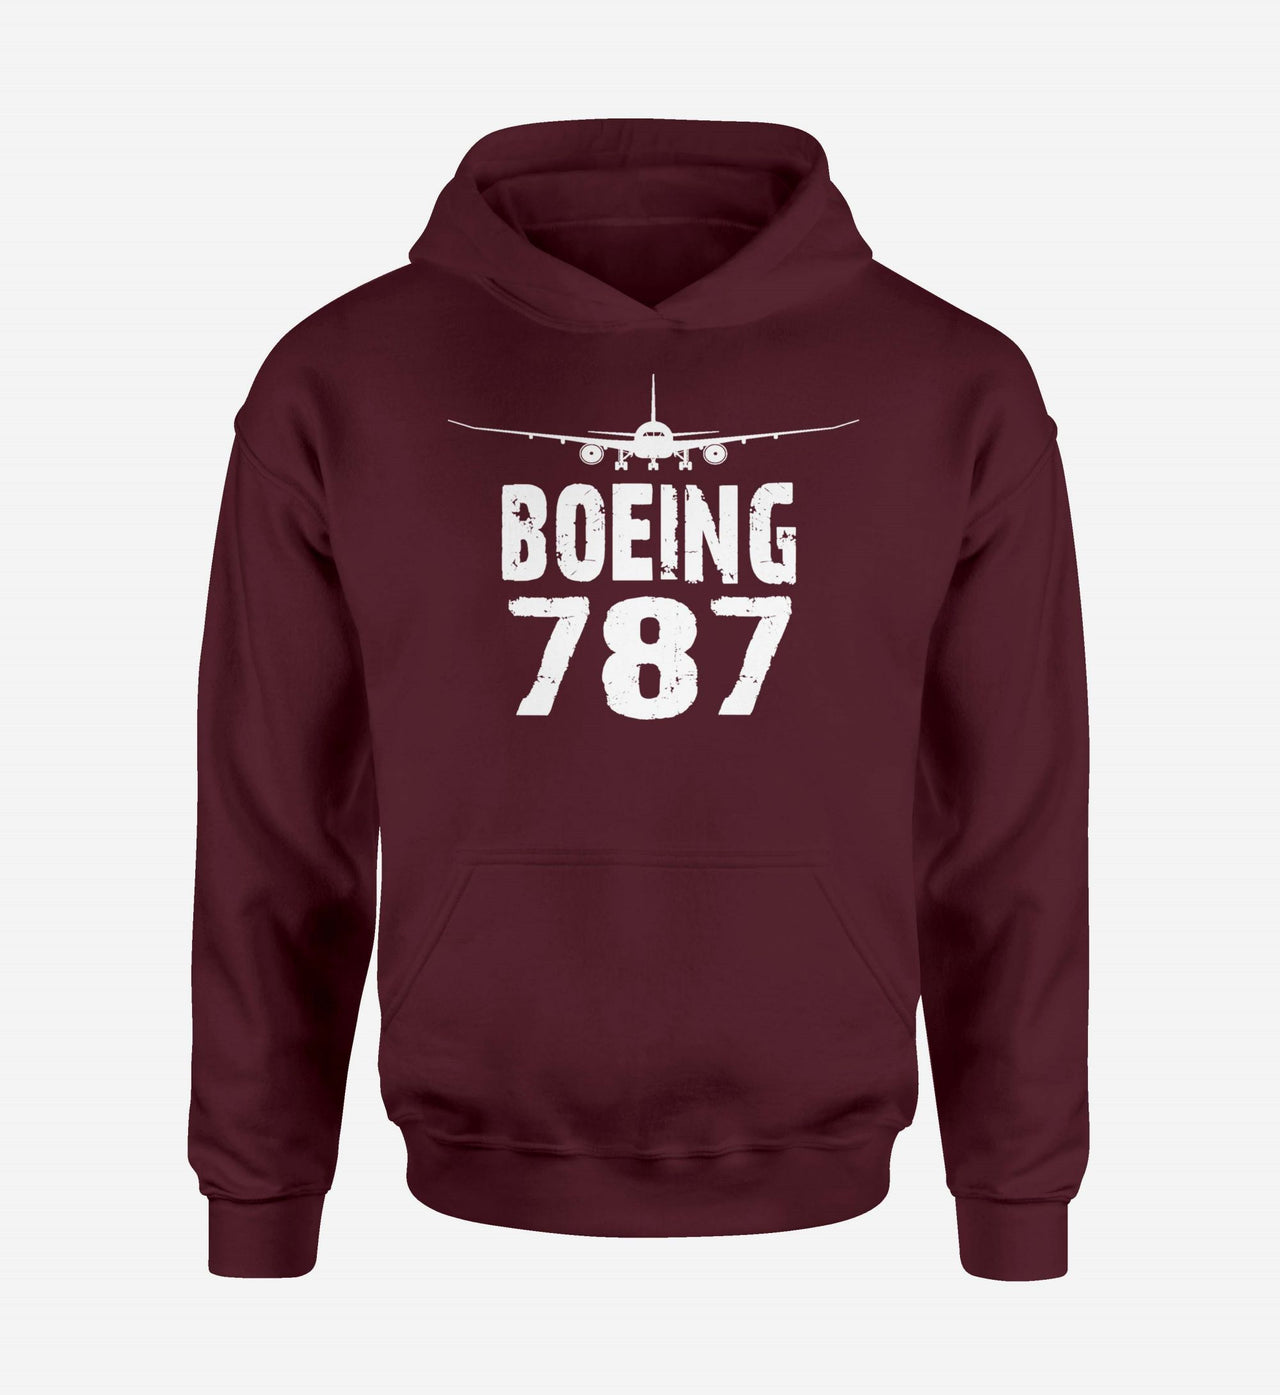 Boeing 787 & Plane Designed Hoodies